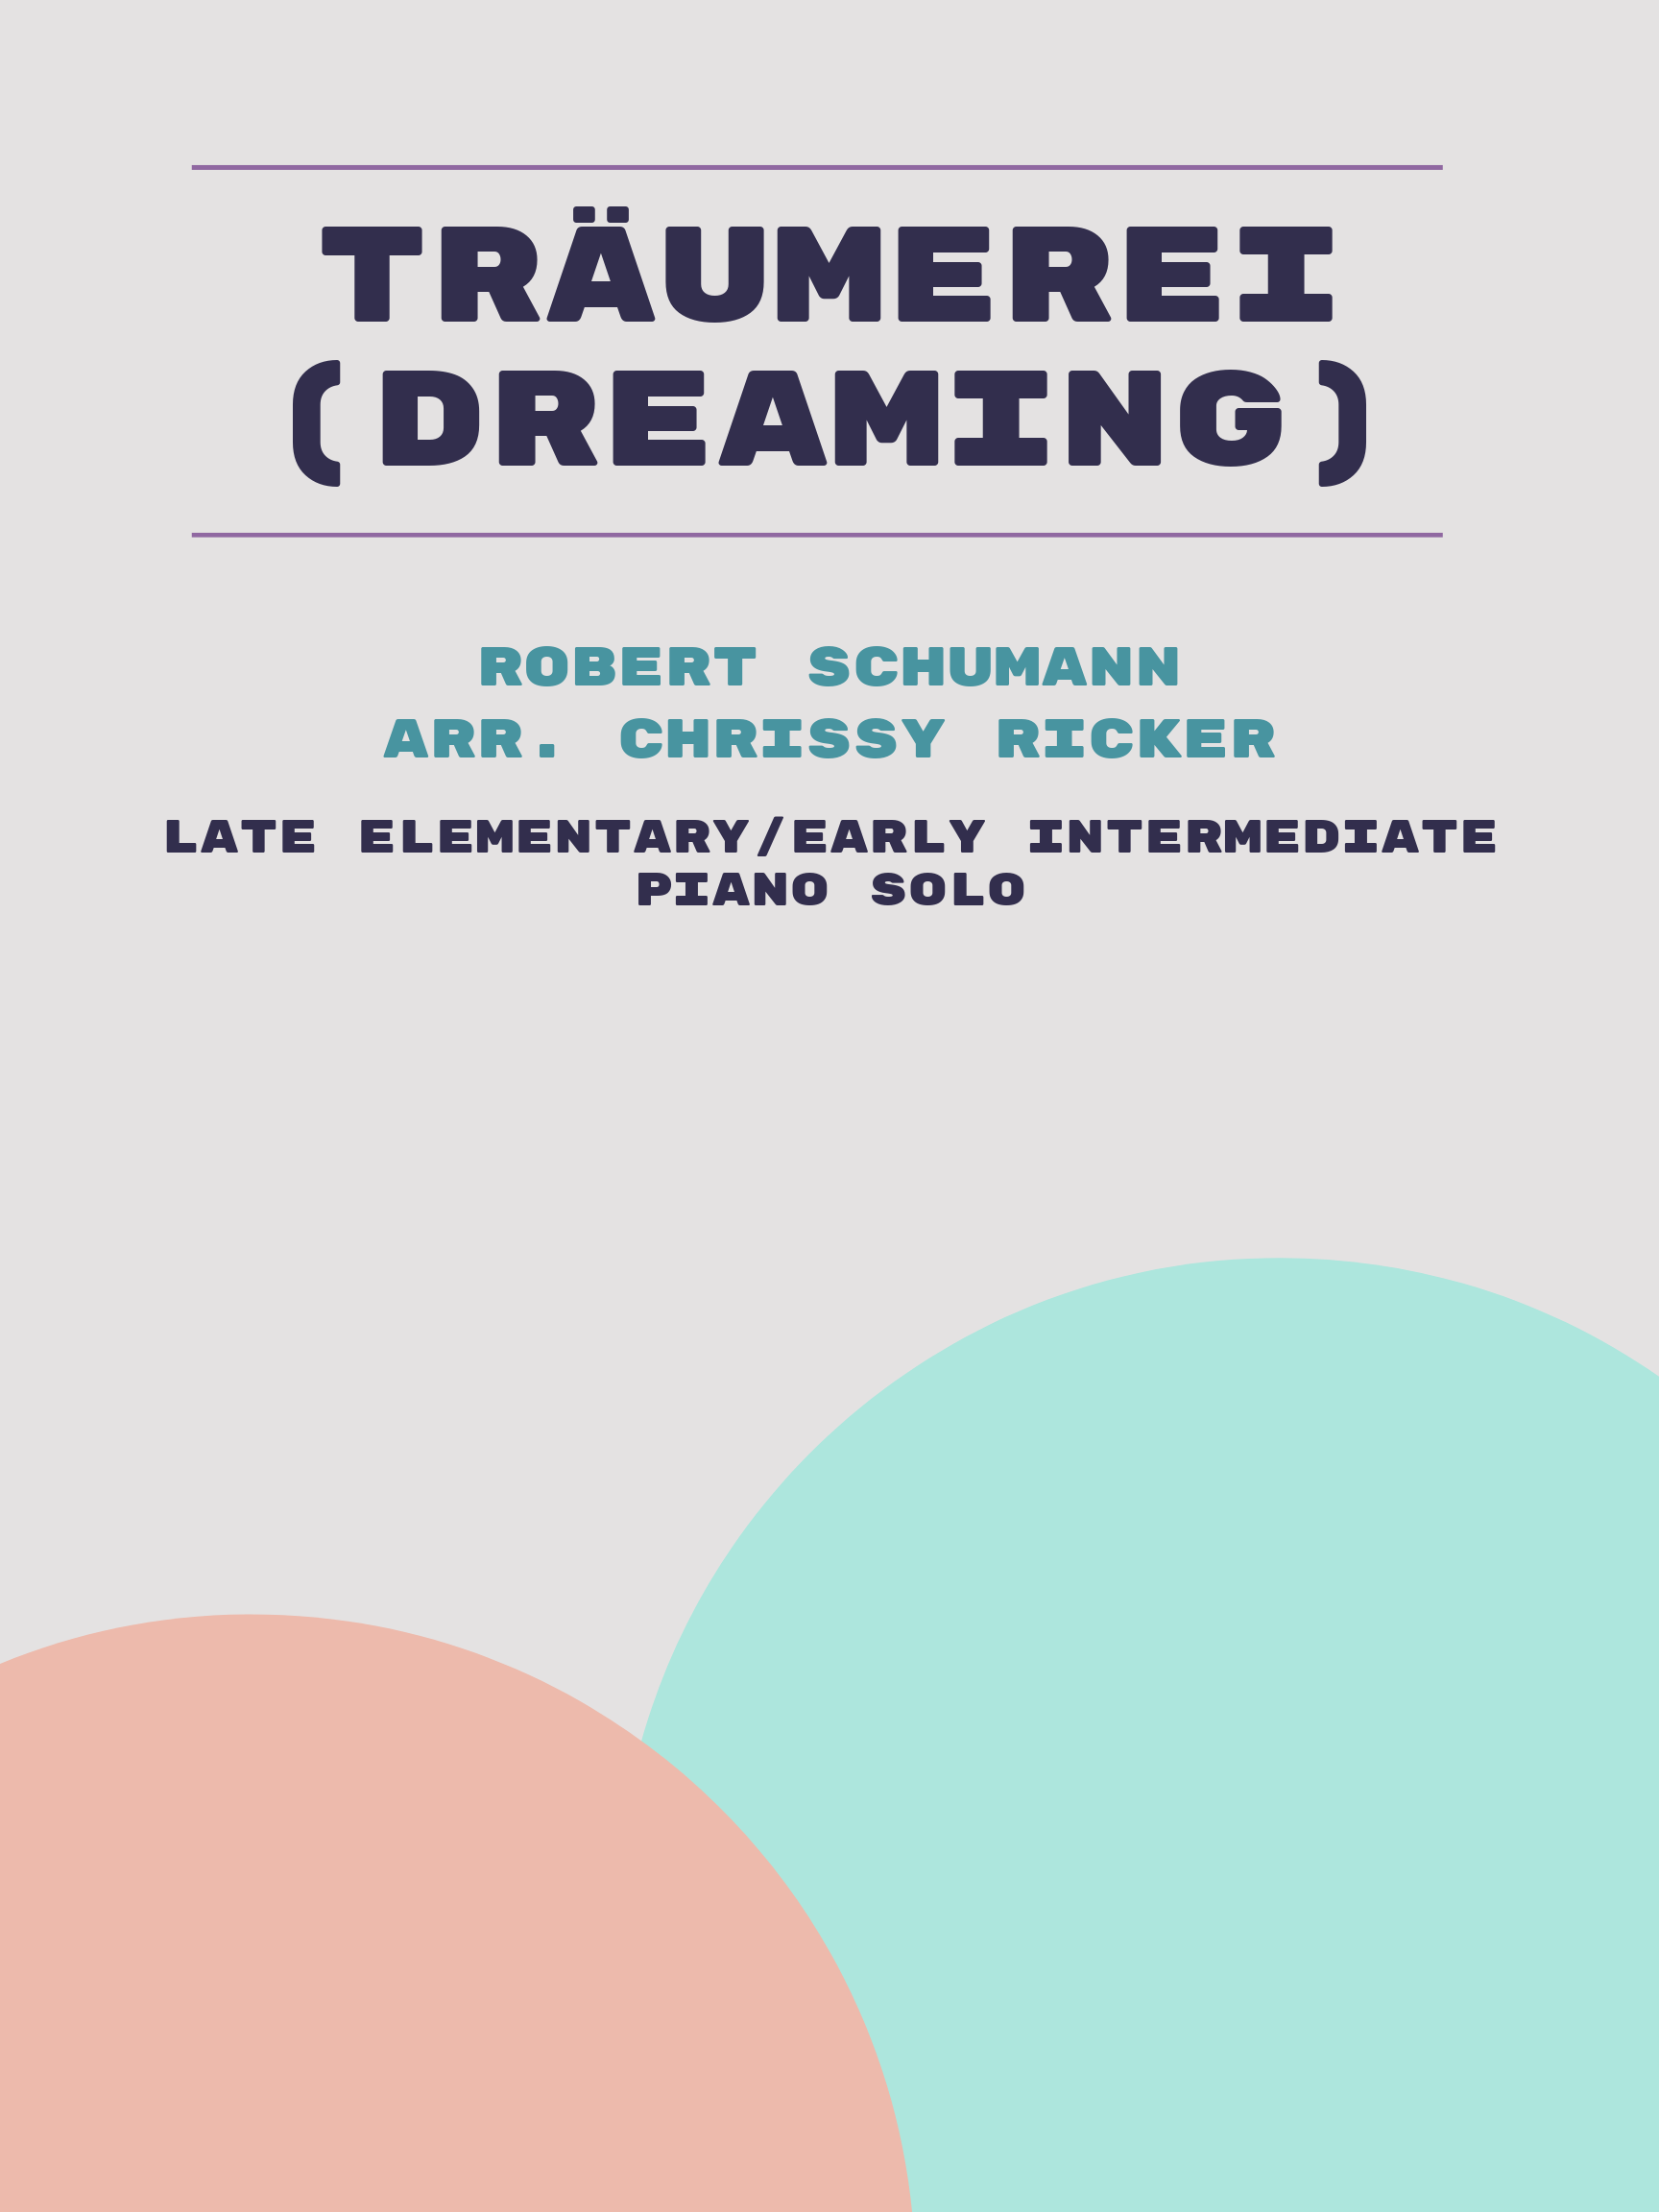 Träumerei (Dreaming) by Robert Schumann